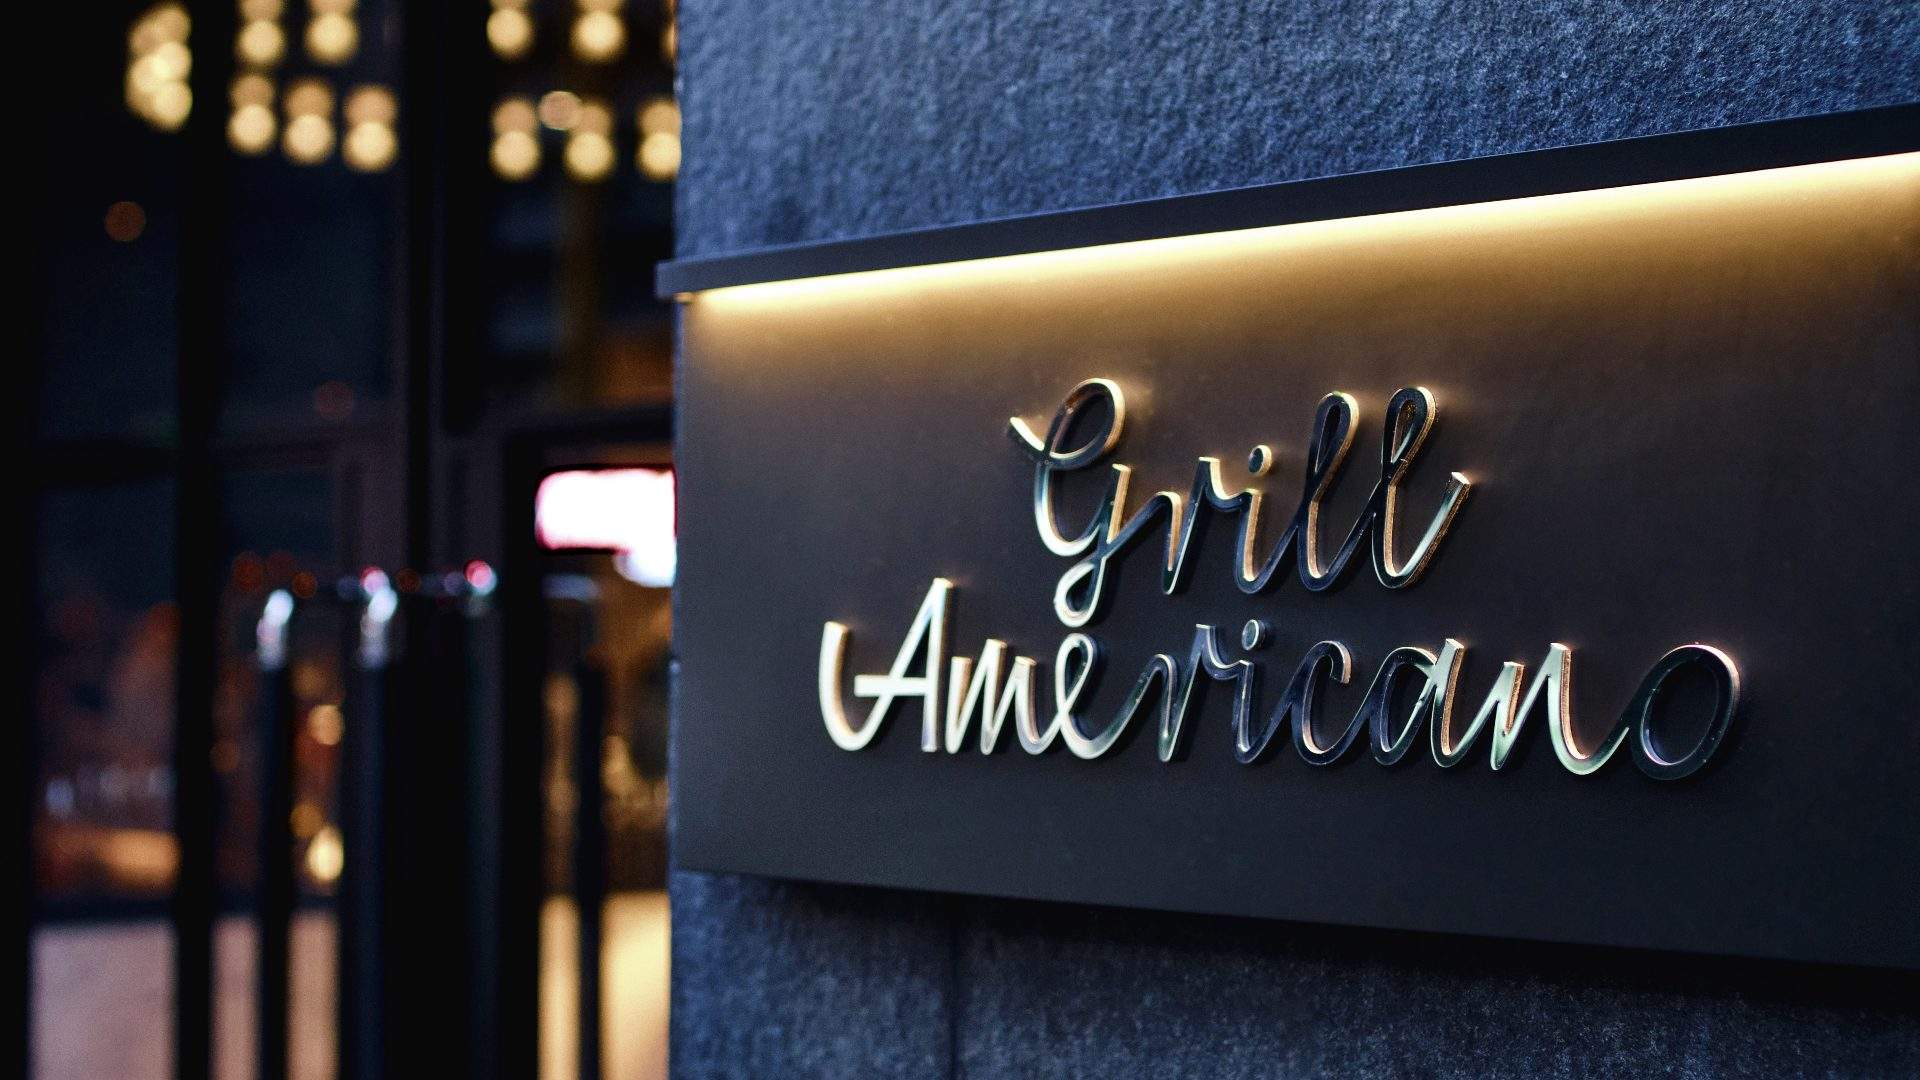 Chris Lucas' Dapper New Steakhouse Grill Americano Arrives in Melbourne Next Week